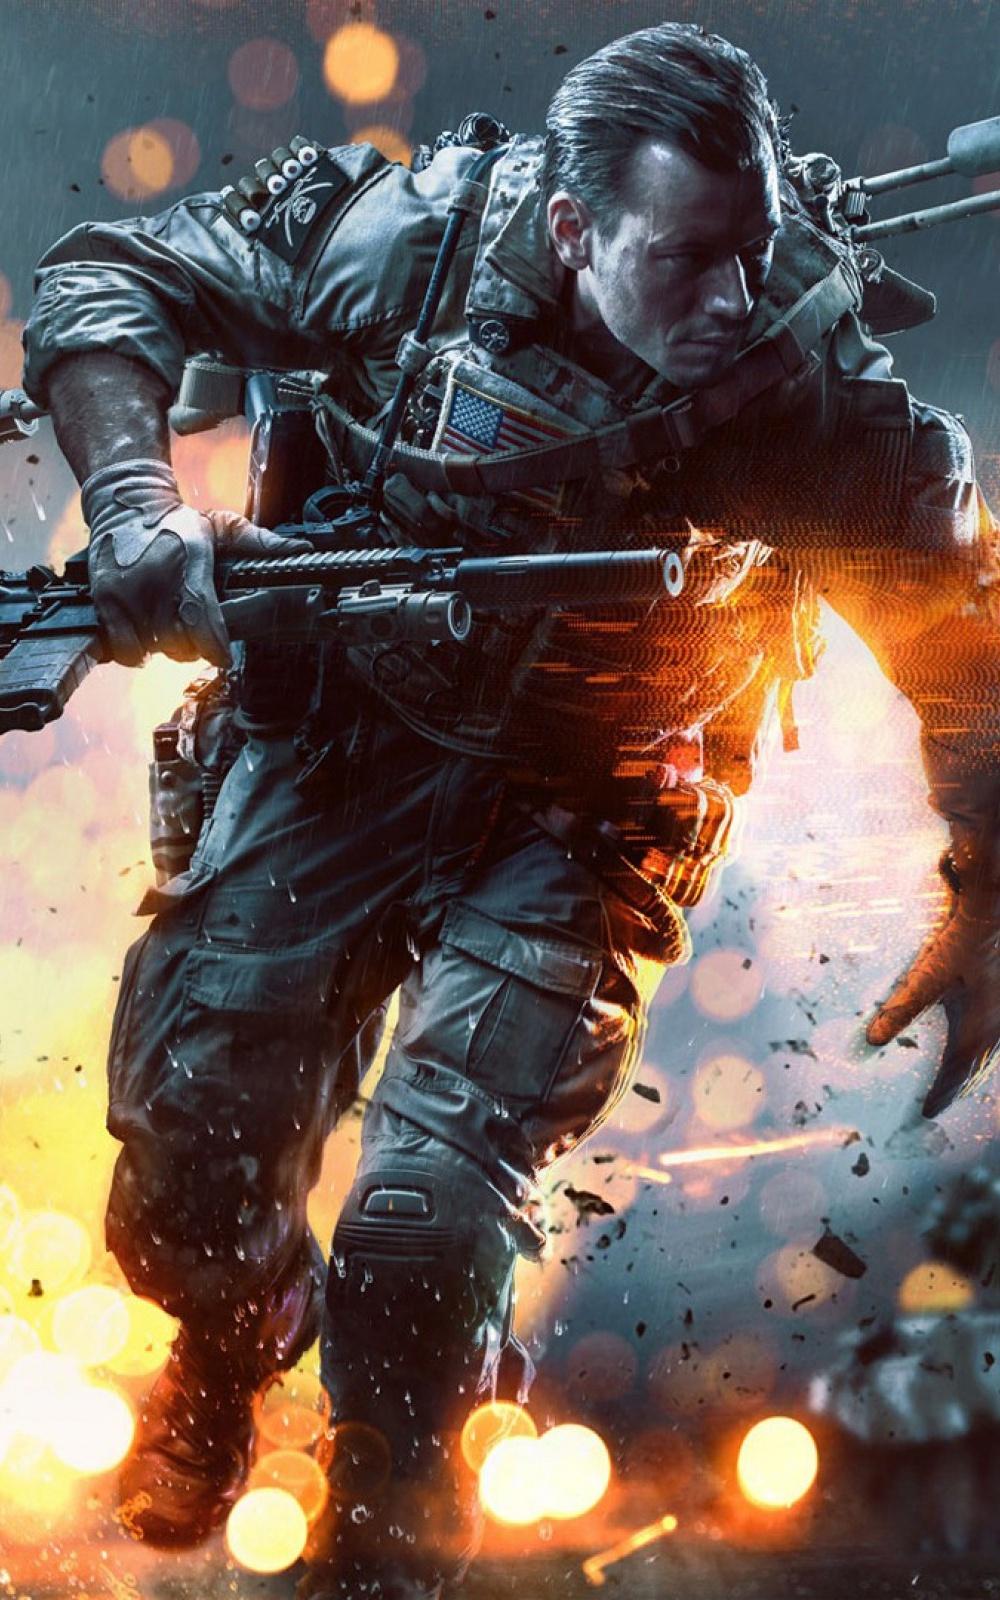 Battlefield Soldier War Android Wallpaper free download